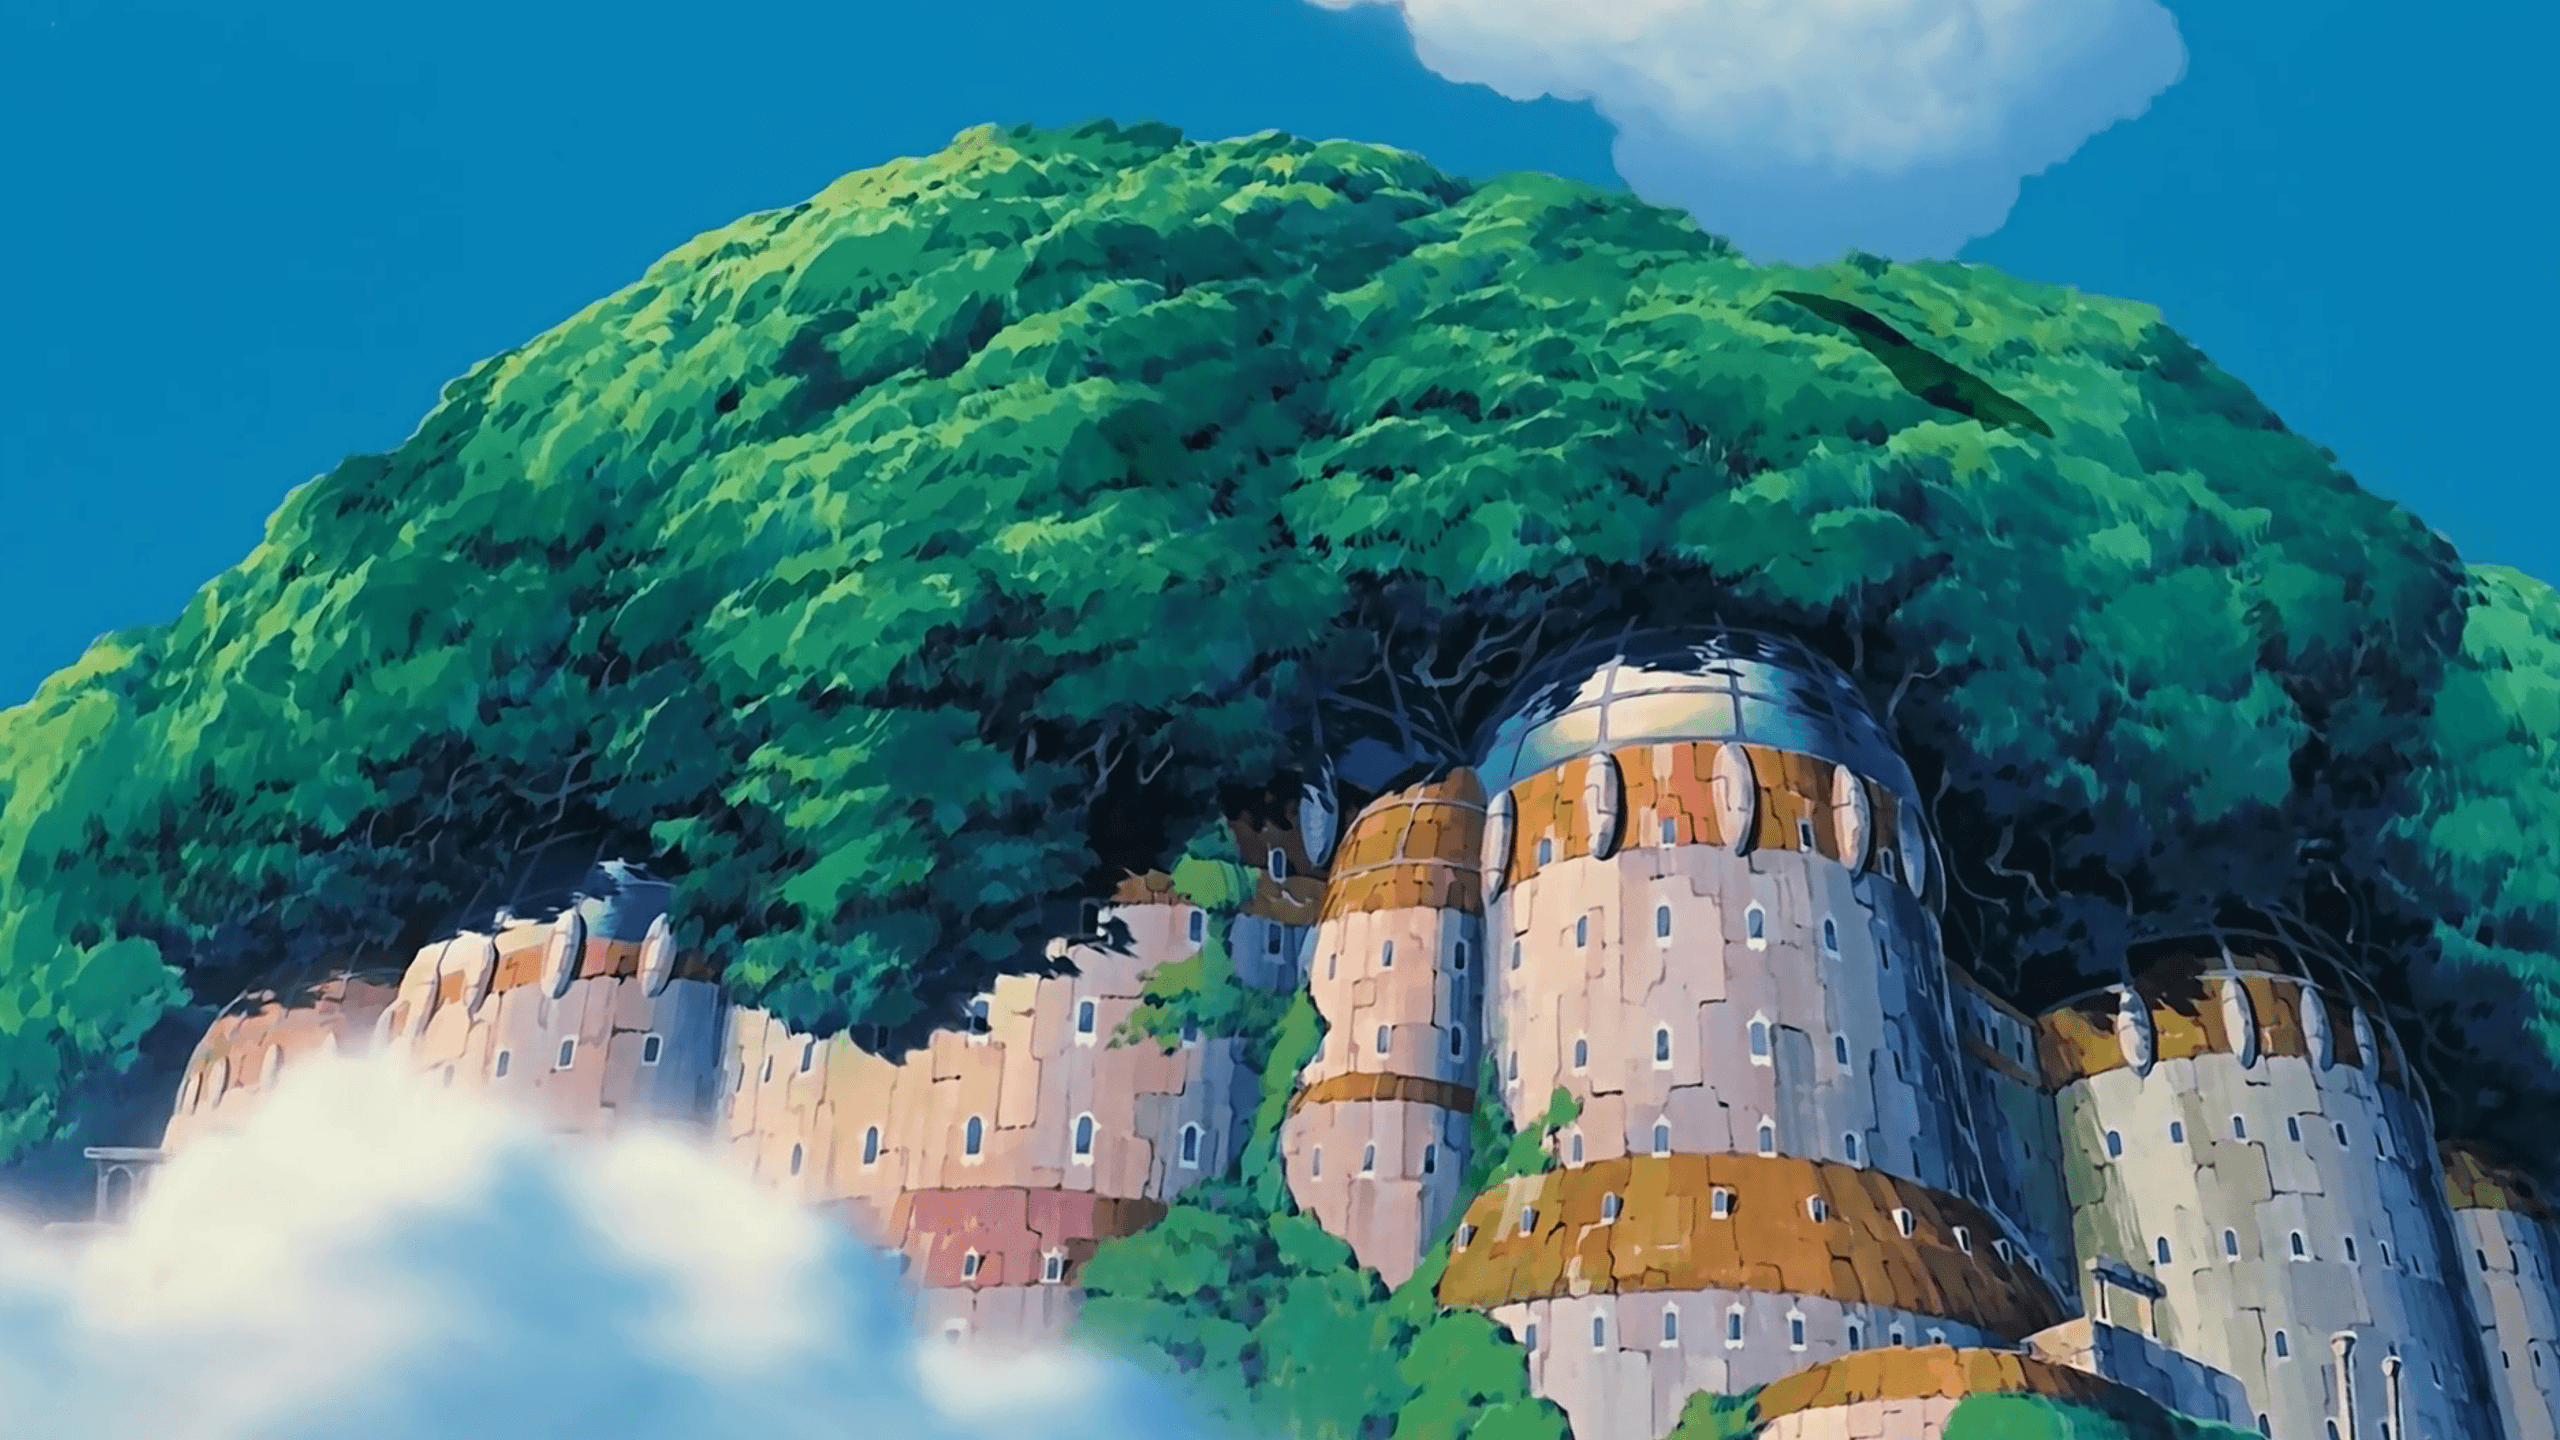 Studio Ghibli Computer Wallpaper